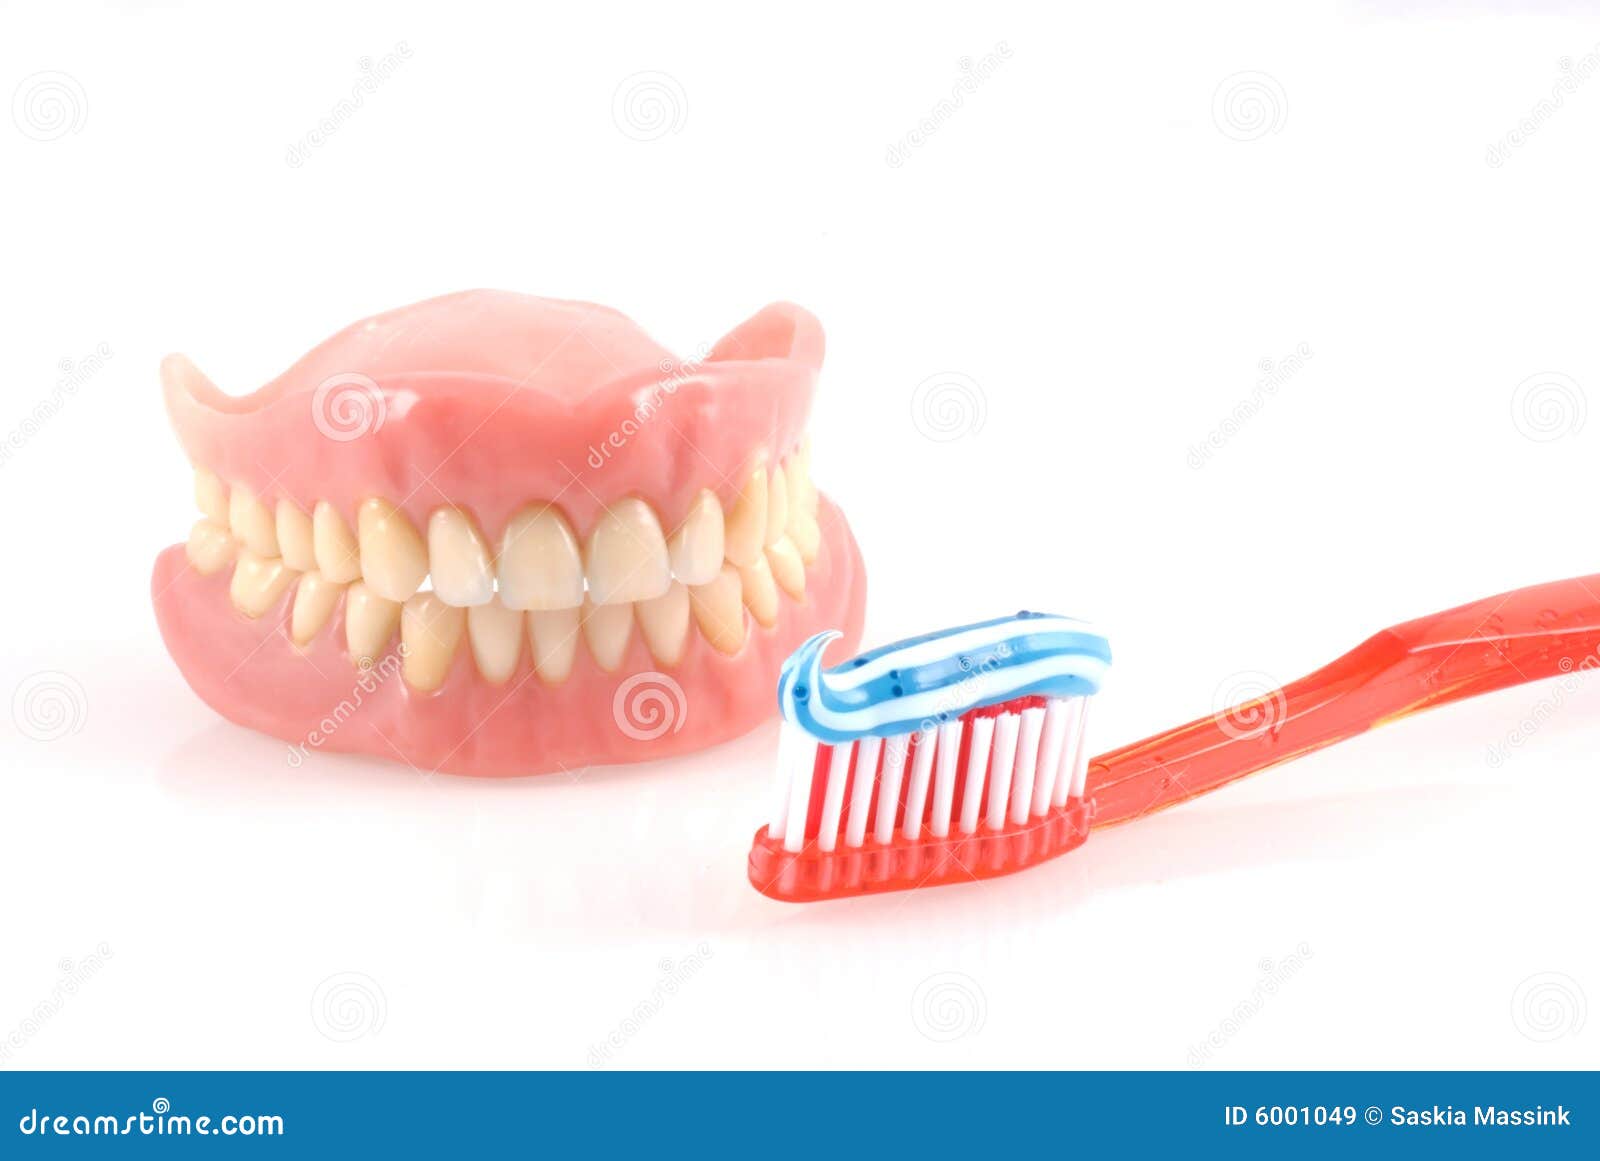 dental-care-6001049.jpg